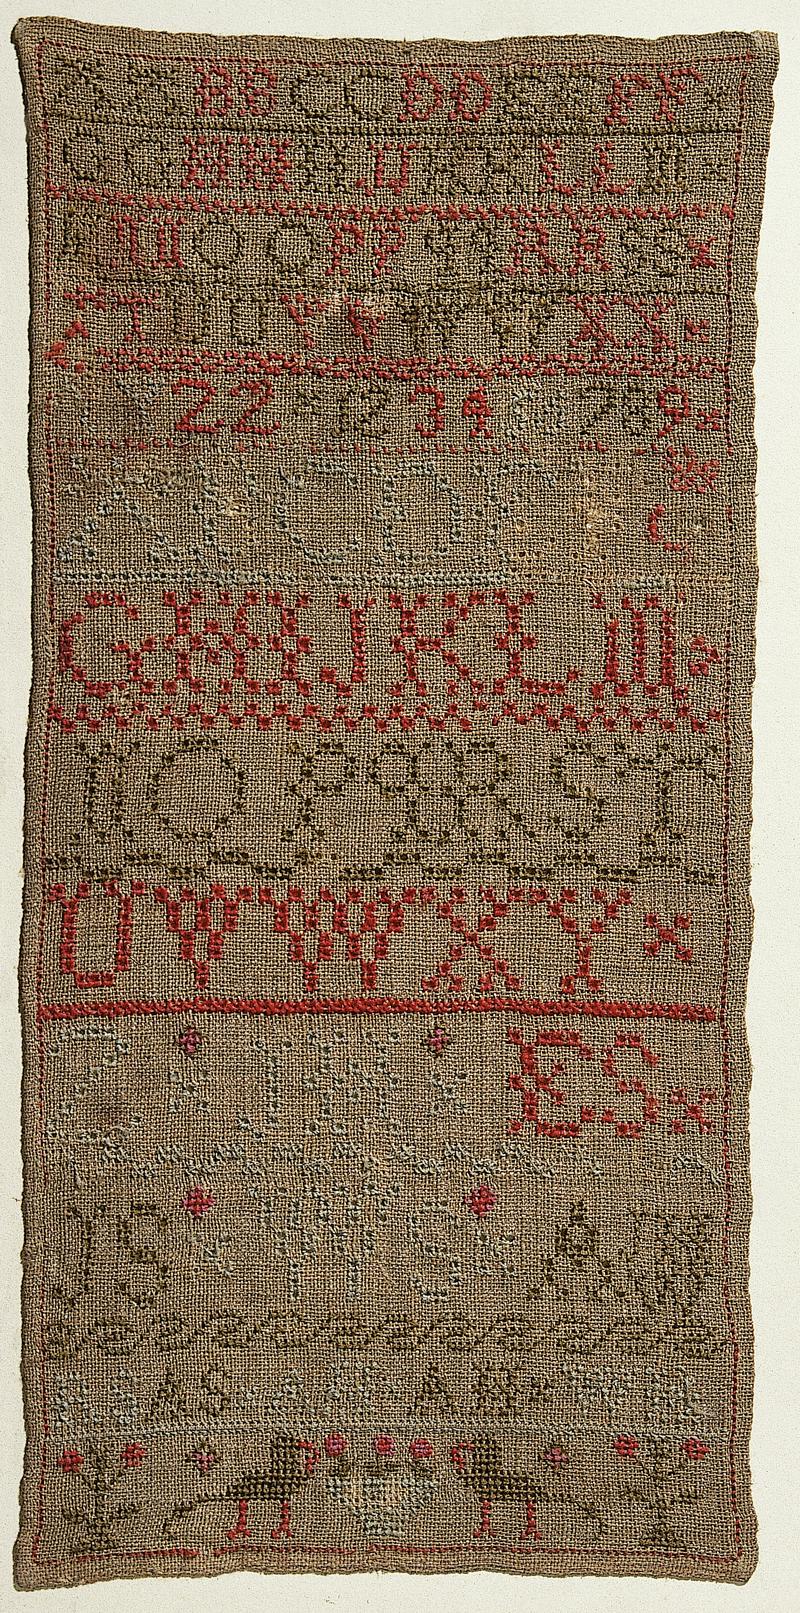 Sampler (alphabet & motifs), made in England, c. 1840